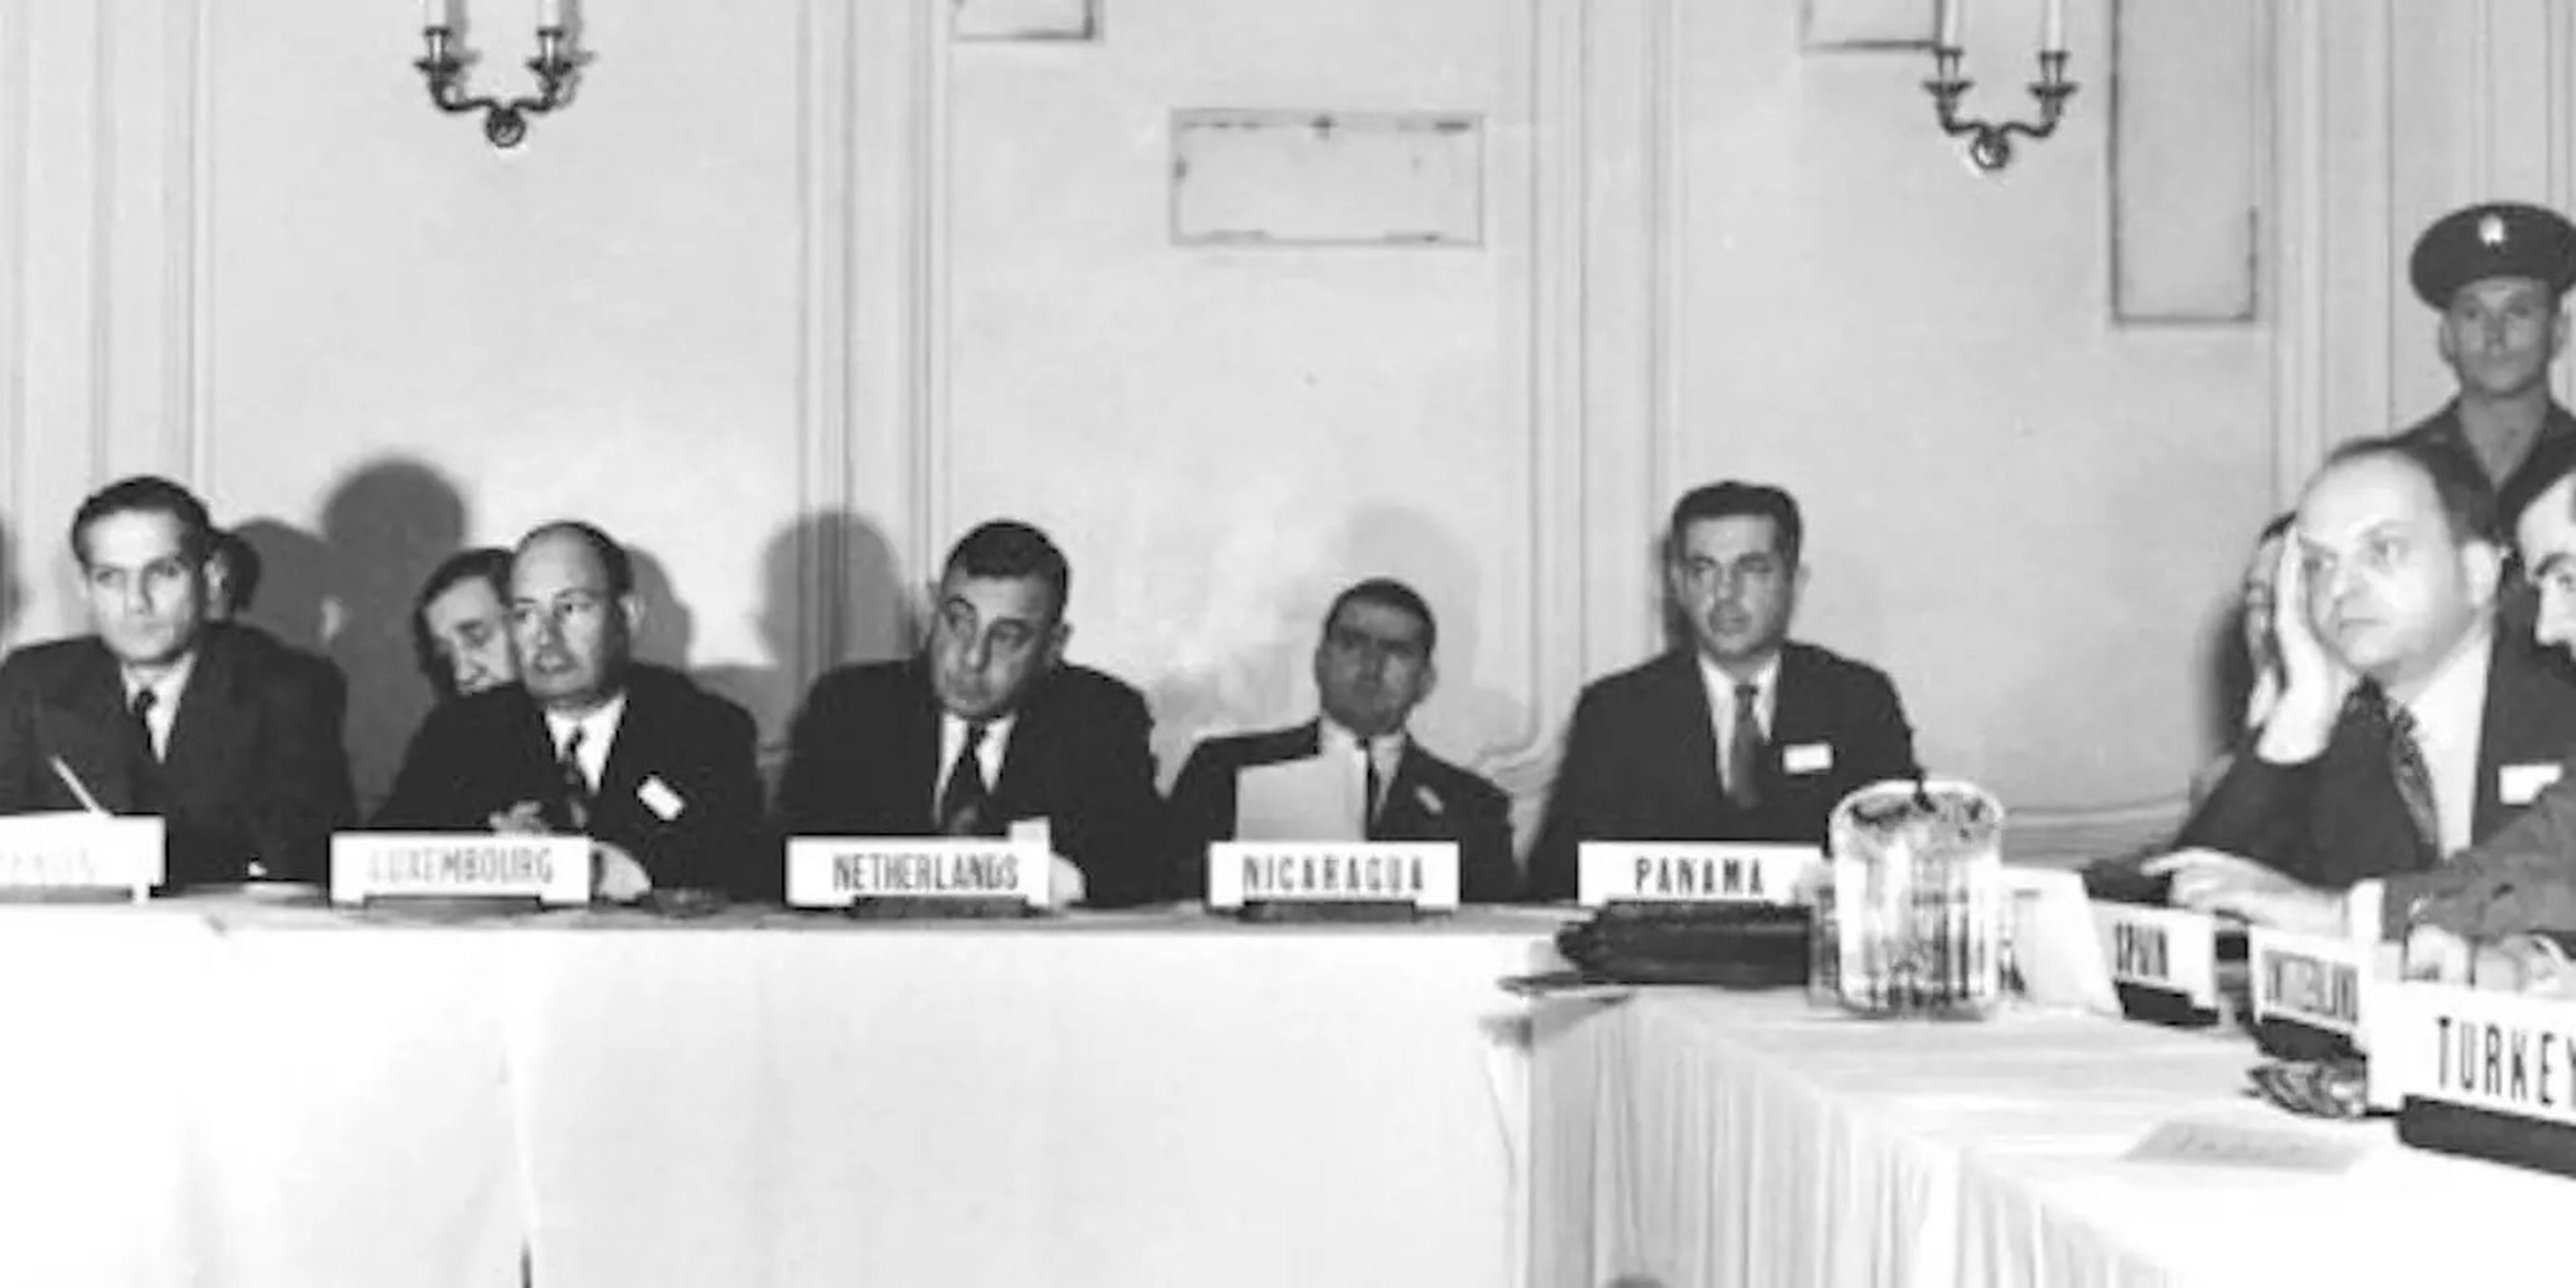 A la reunión de Chicago asistieron 700 delegados de 52 Estados, según la OACI, que afirmó desear un transporte aéreo pacífico e igualitario, a pesar de la Segunda Guerra Mundial en curso.